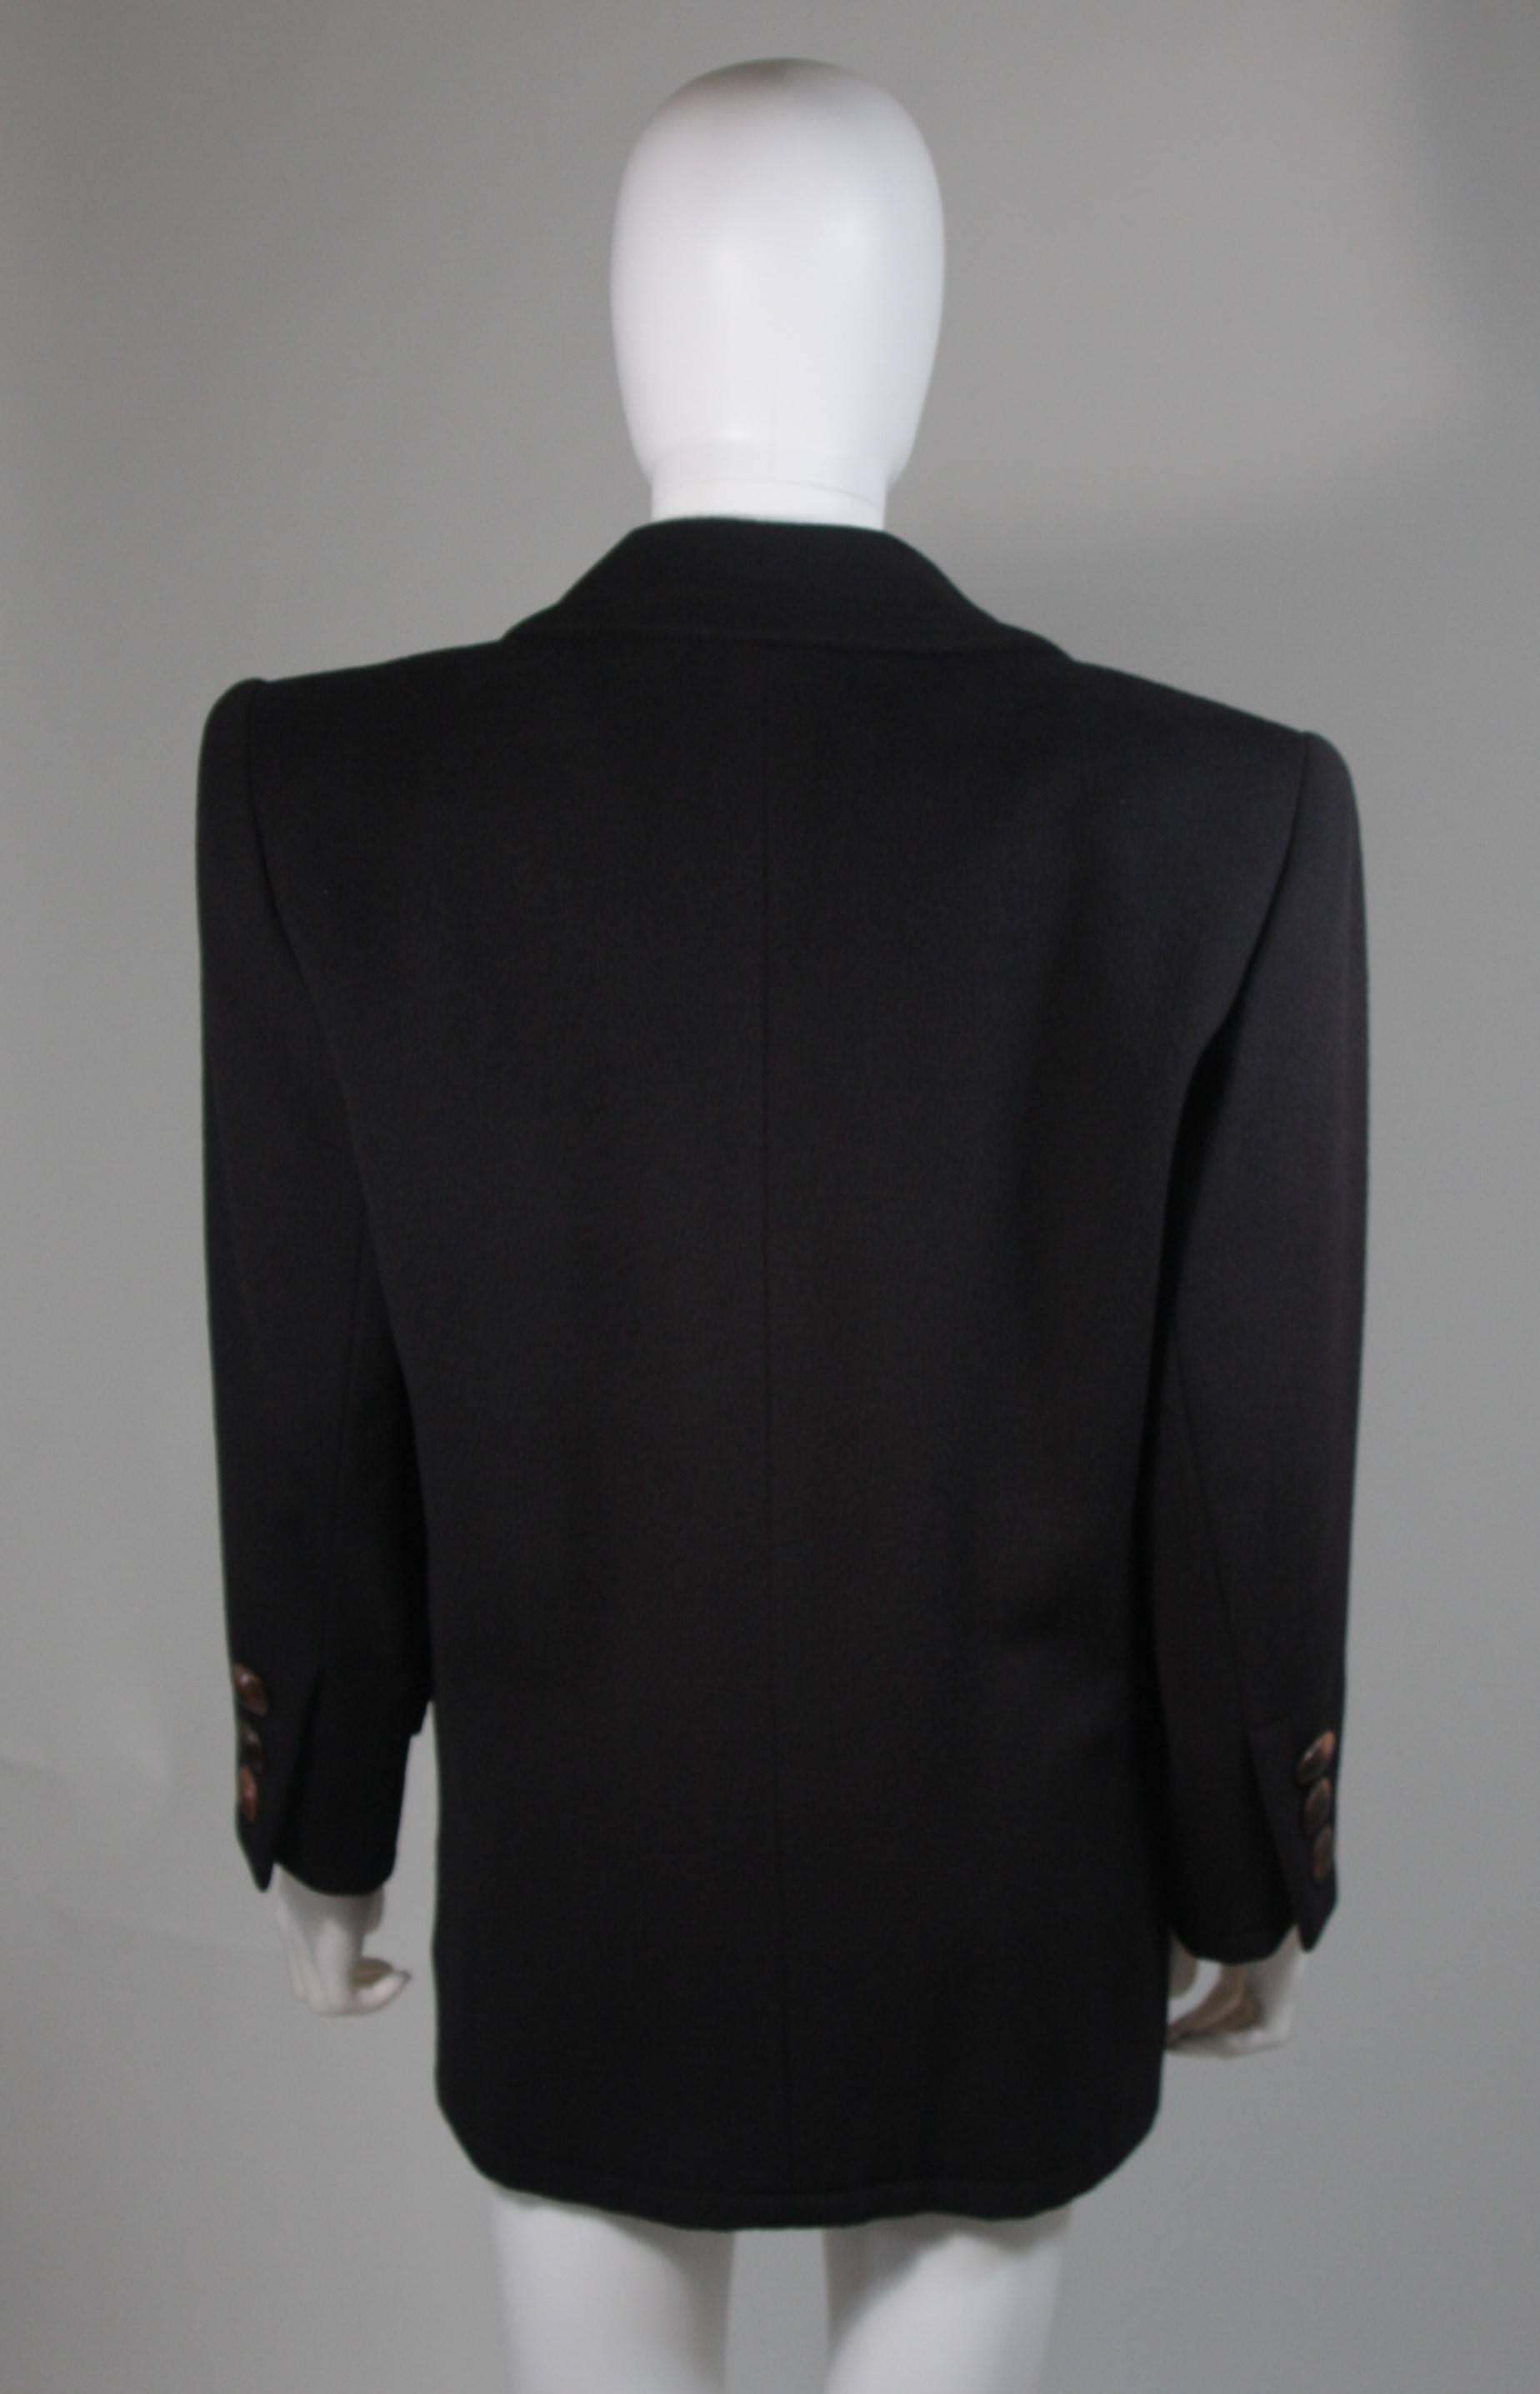 Yves Saint Laurent Black Cashmere Coat with Wood Button Size Large 2